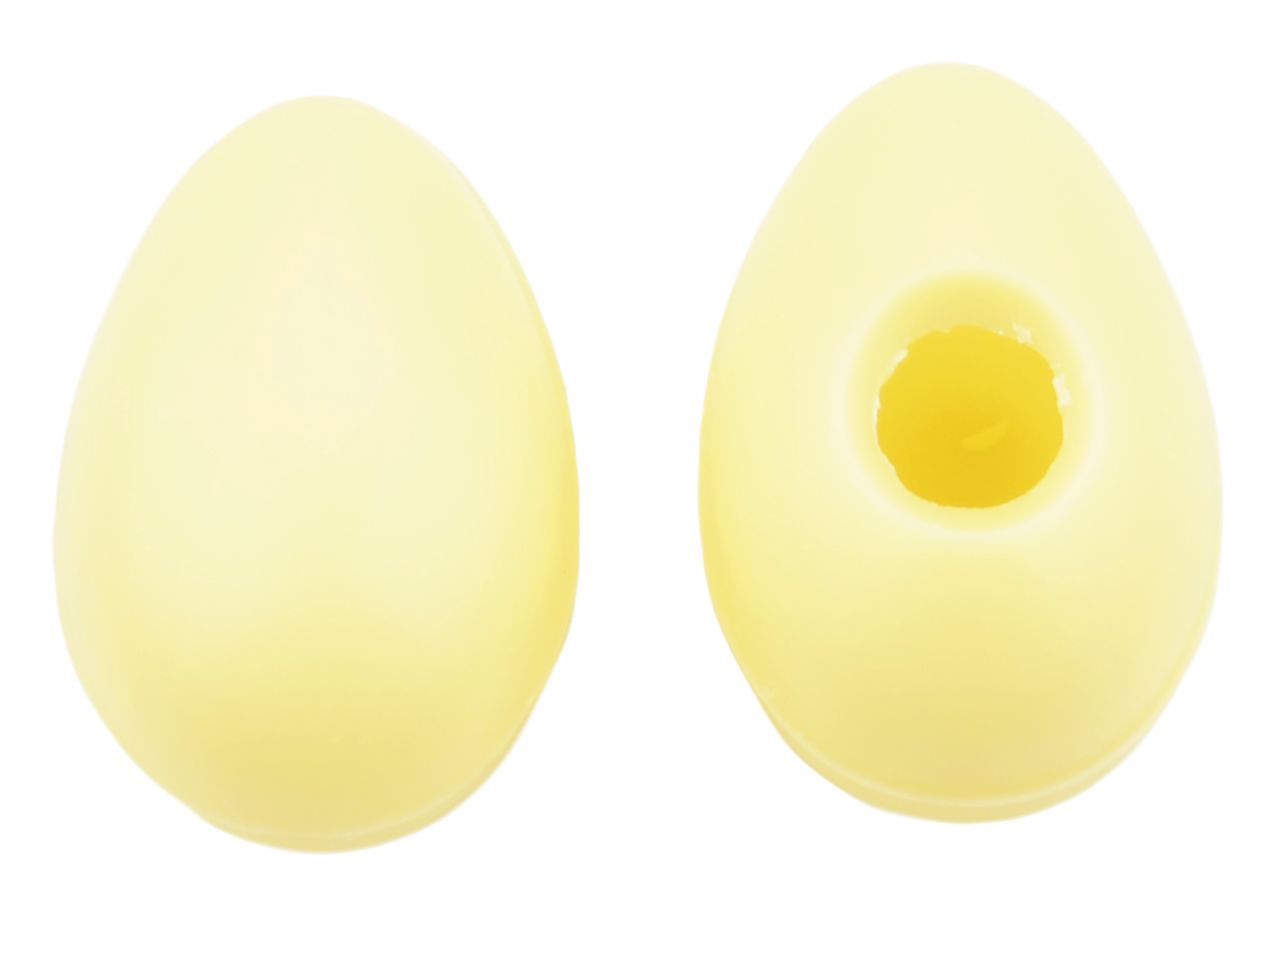 1 Folie Hohlkörper Medium-Eier Weiß